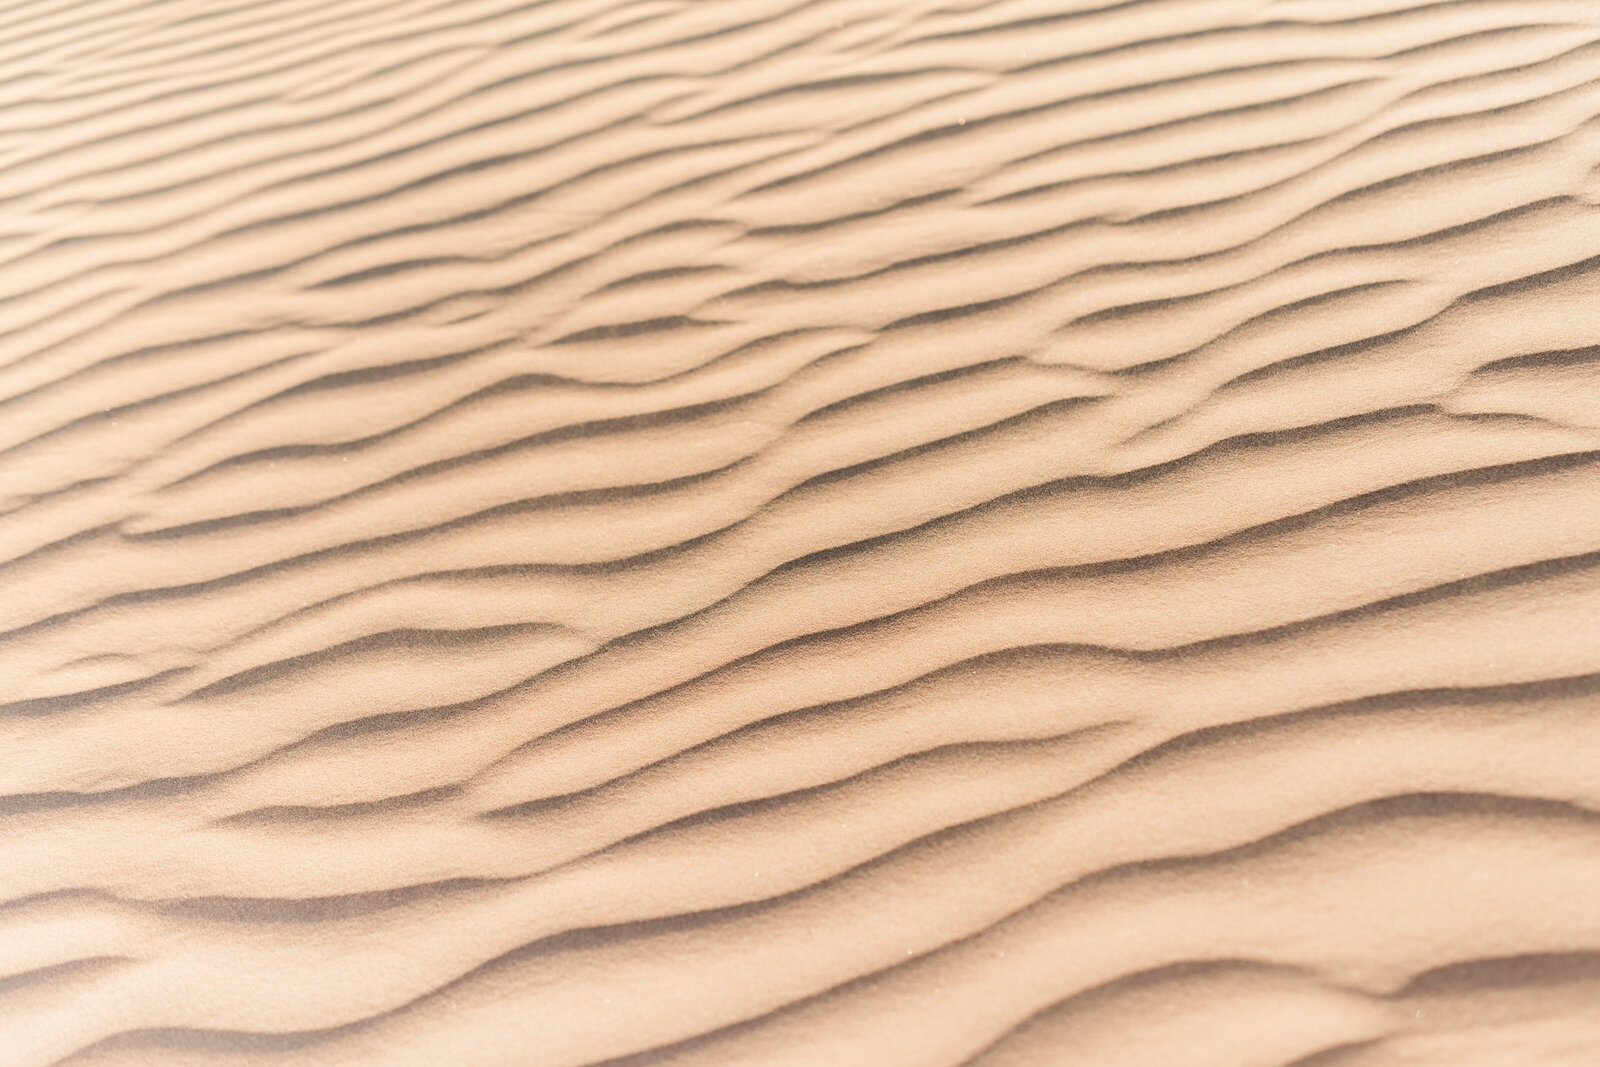 Brand-Photoshoot-Glamis-Sand dunes-San-Diego-010